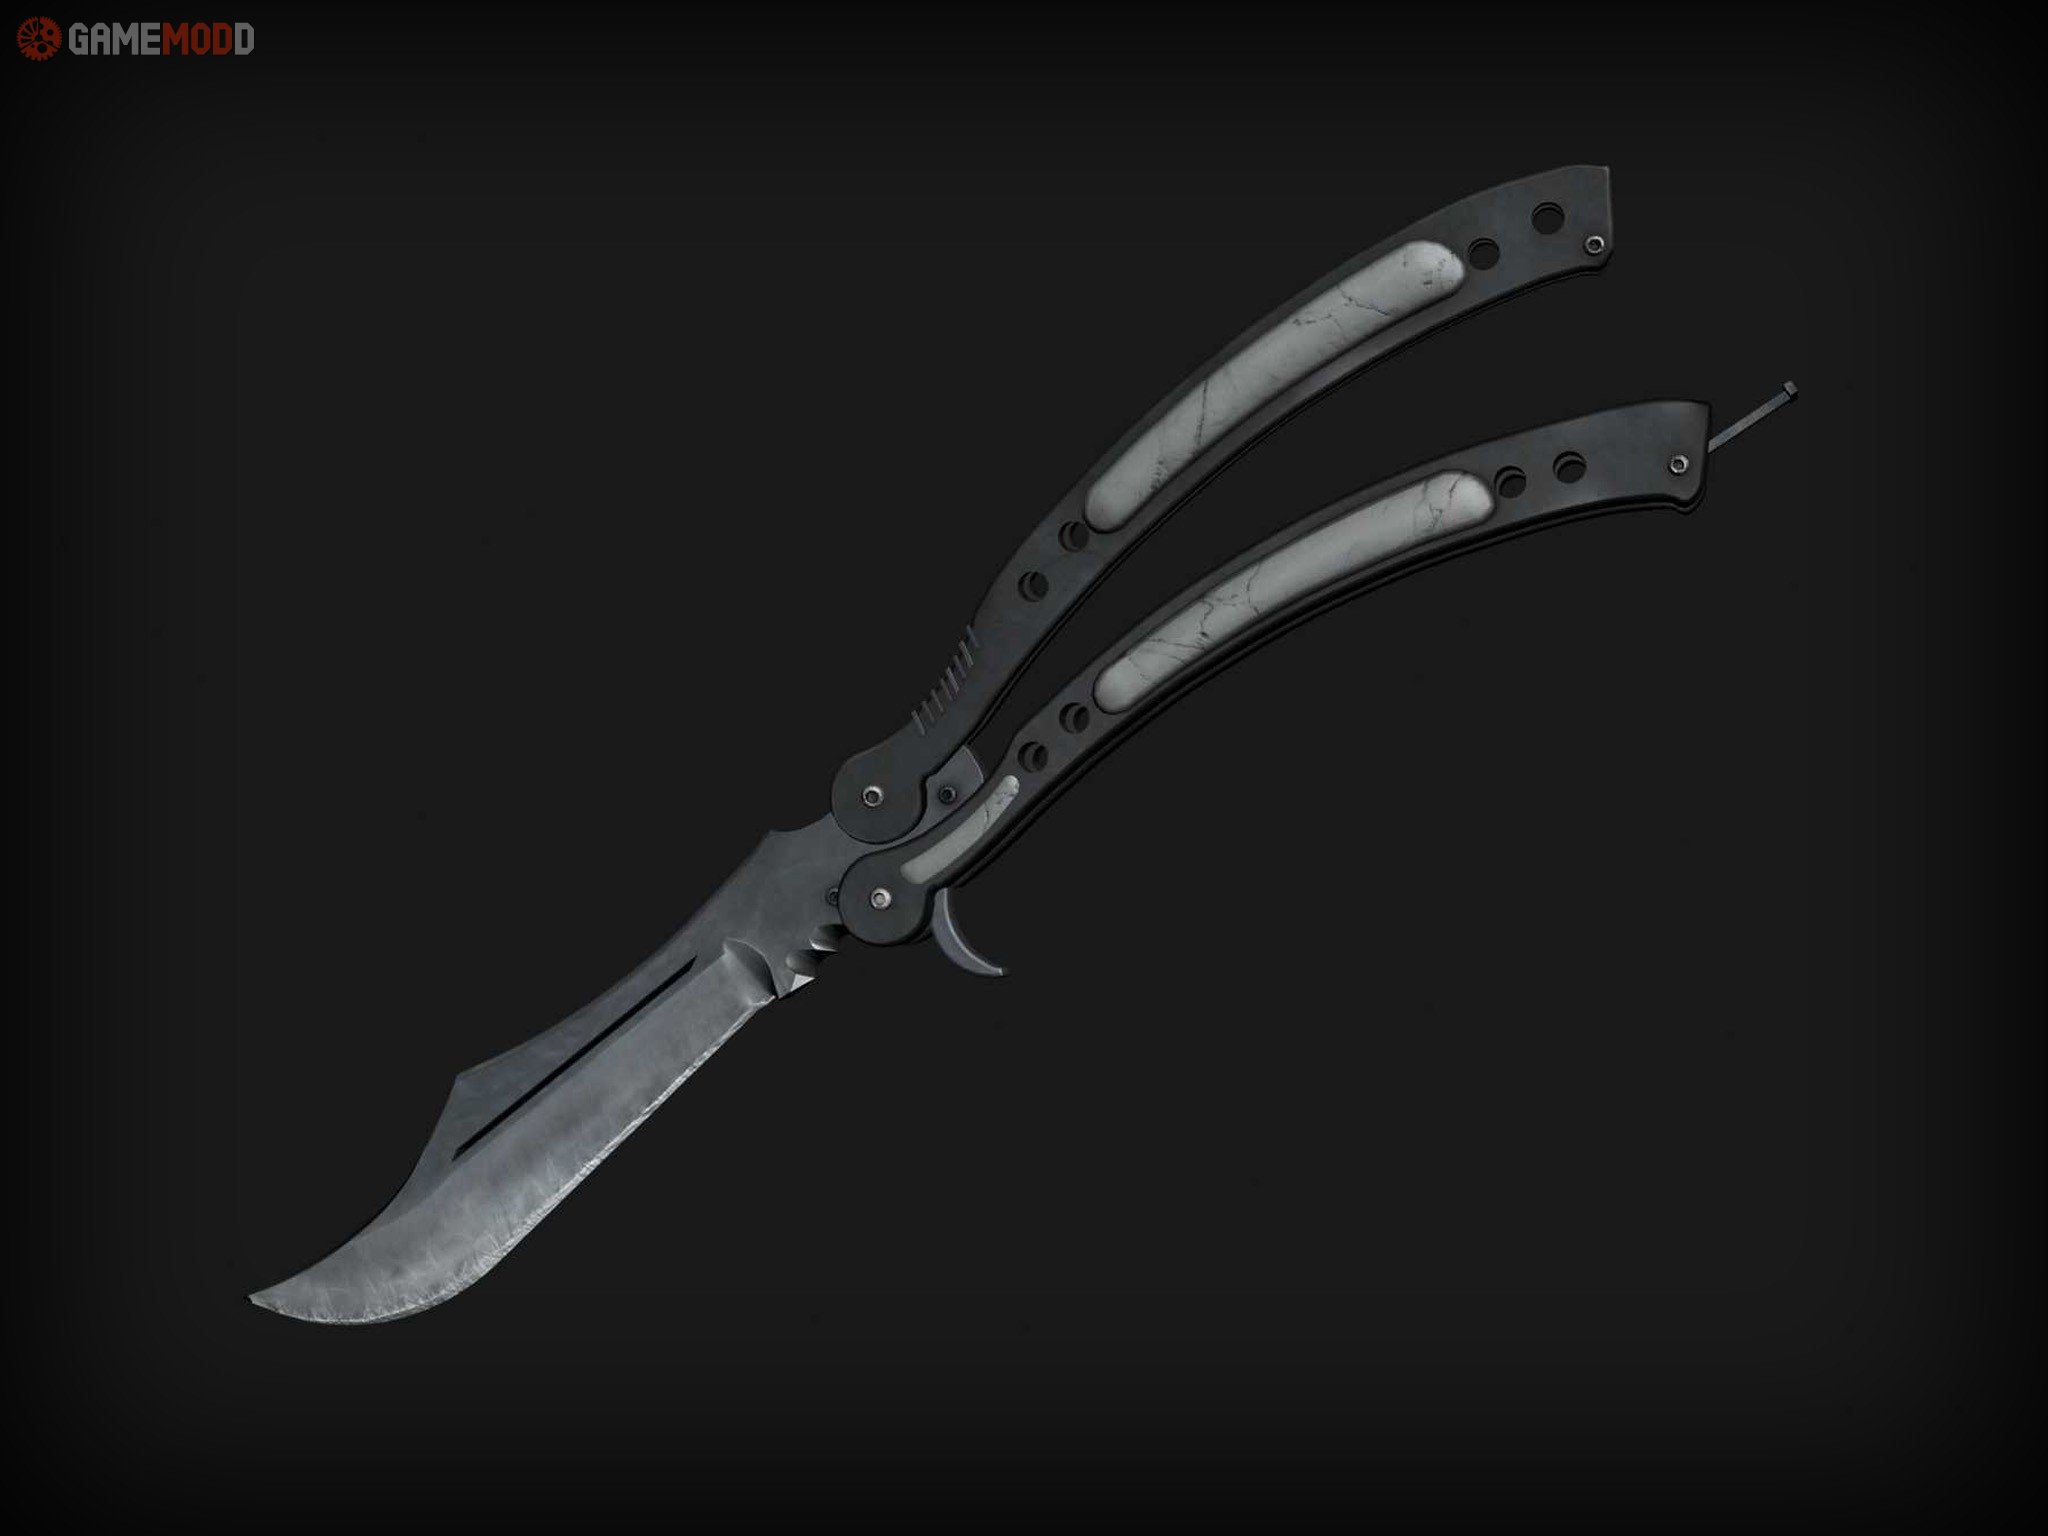 CS  - Skins Weapons Knife | GAMEMODD